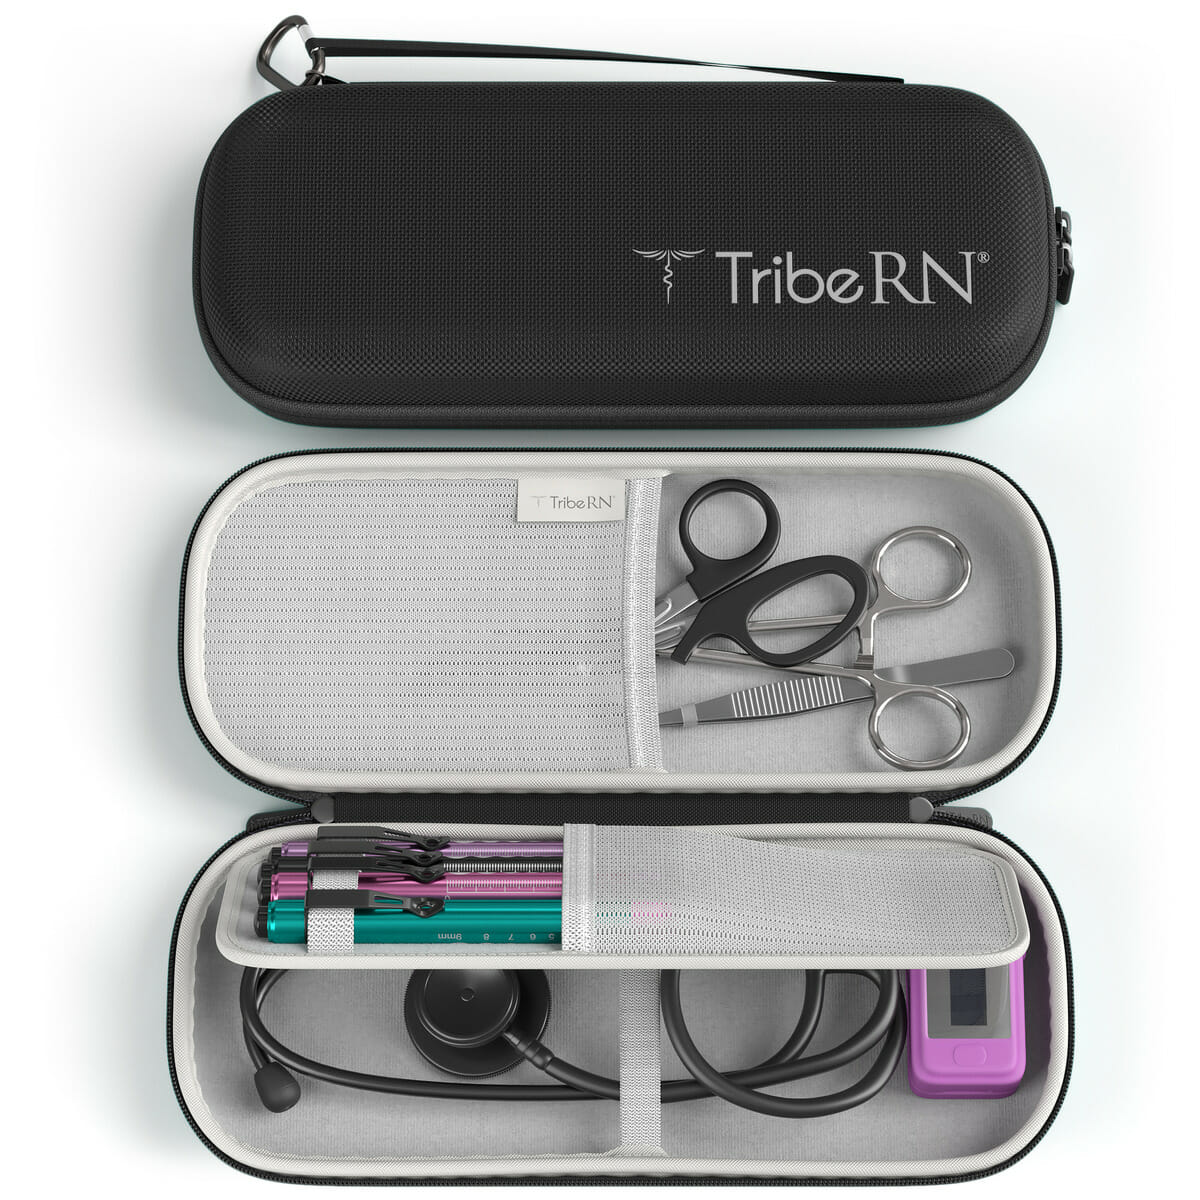 tribeRN stethoscope case